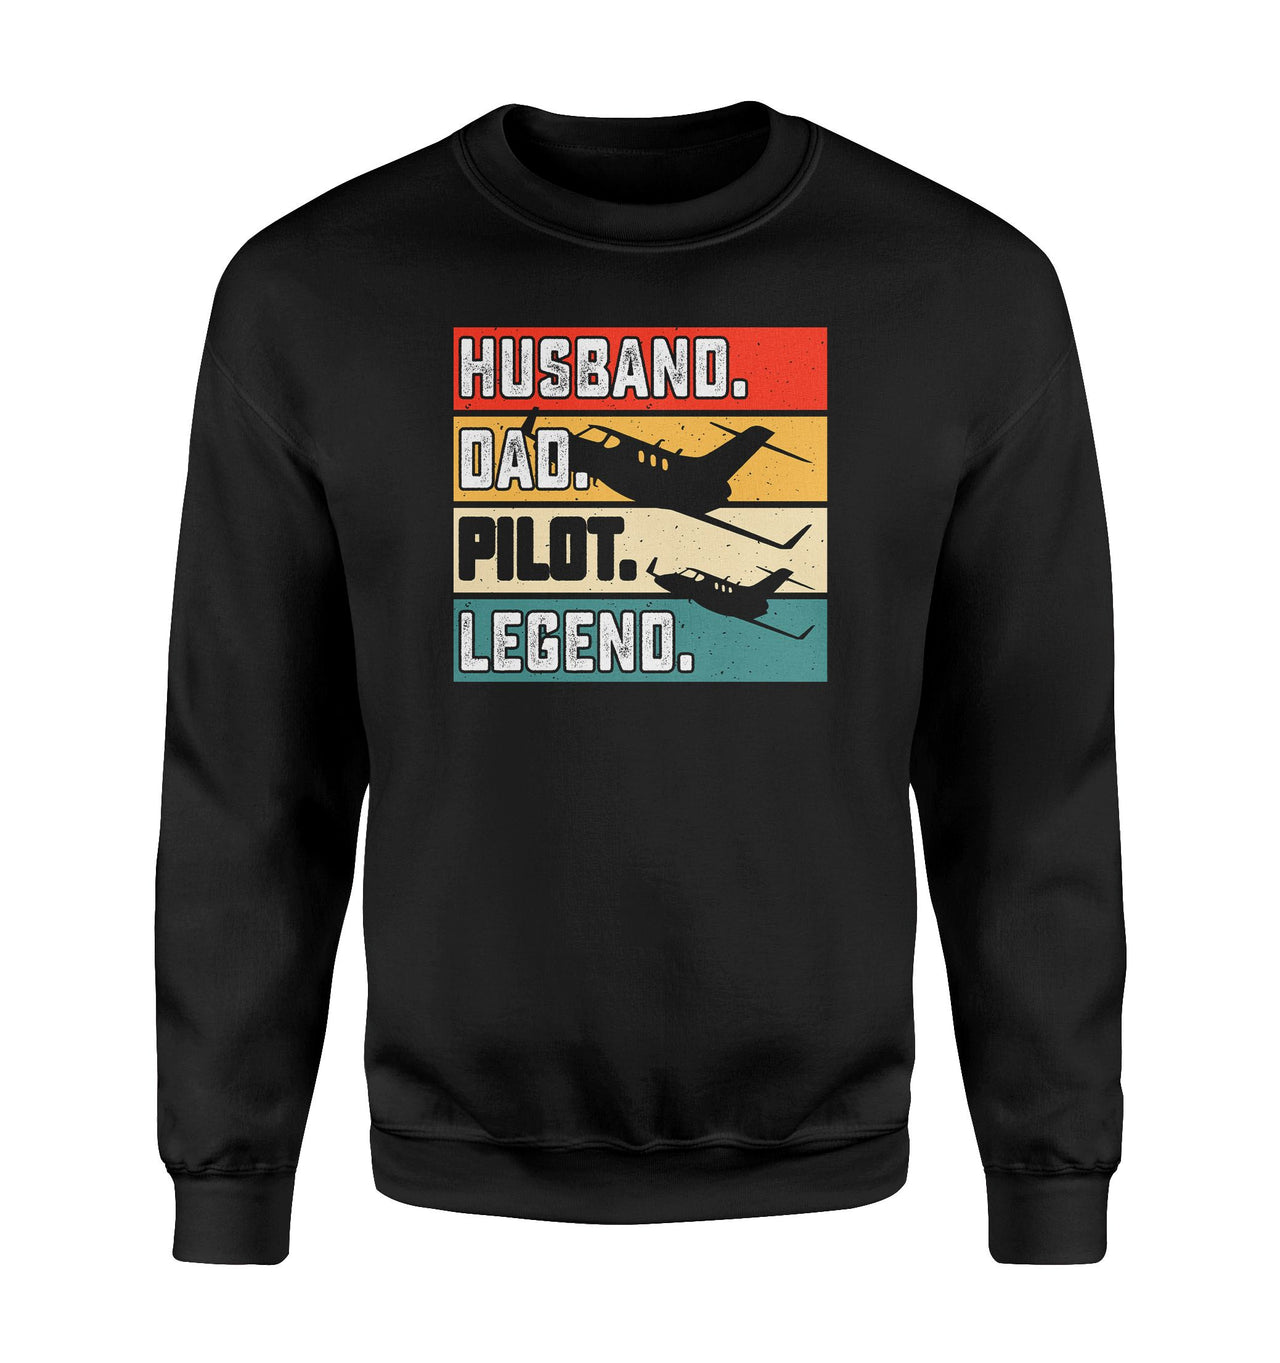 Husband & Dad & Pilot & Legend Designed Sweatshirts